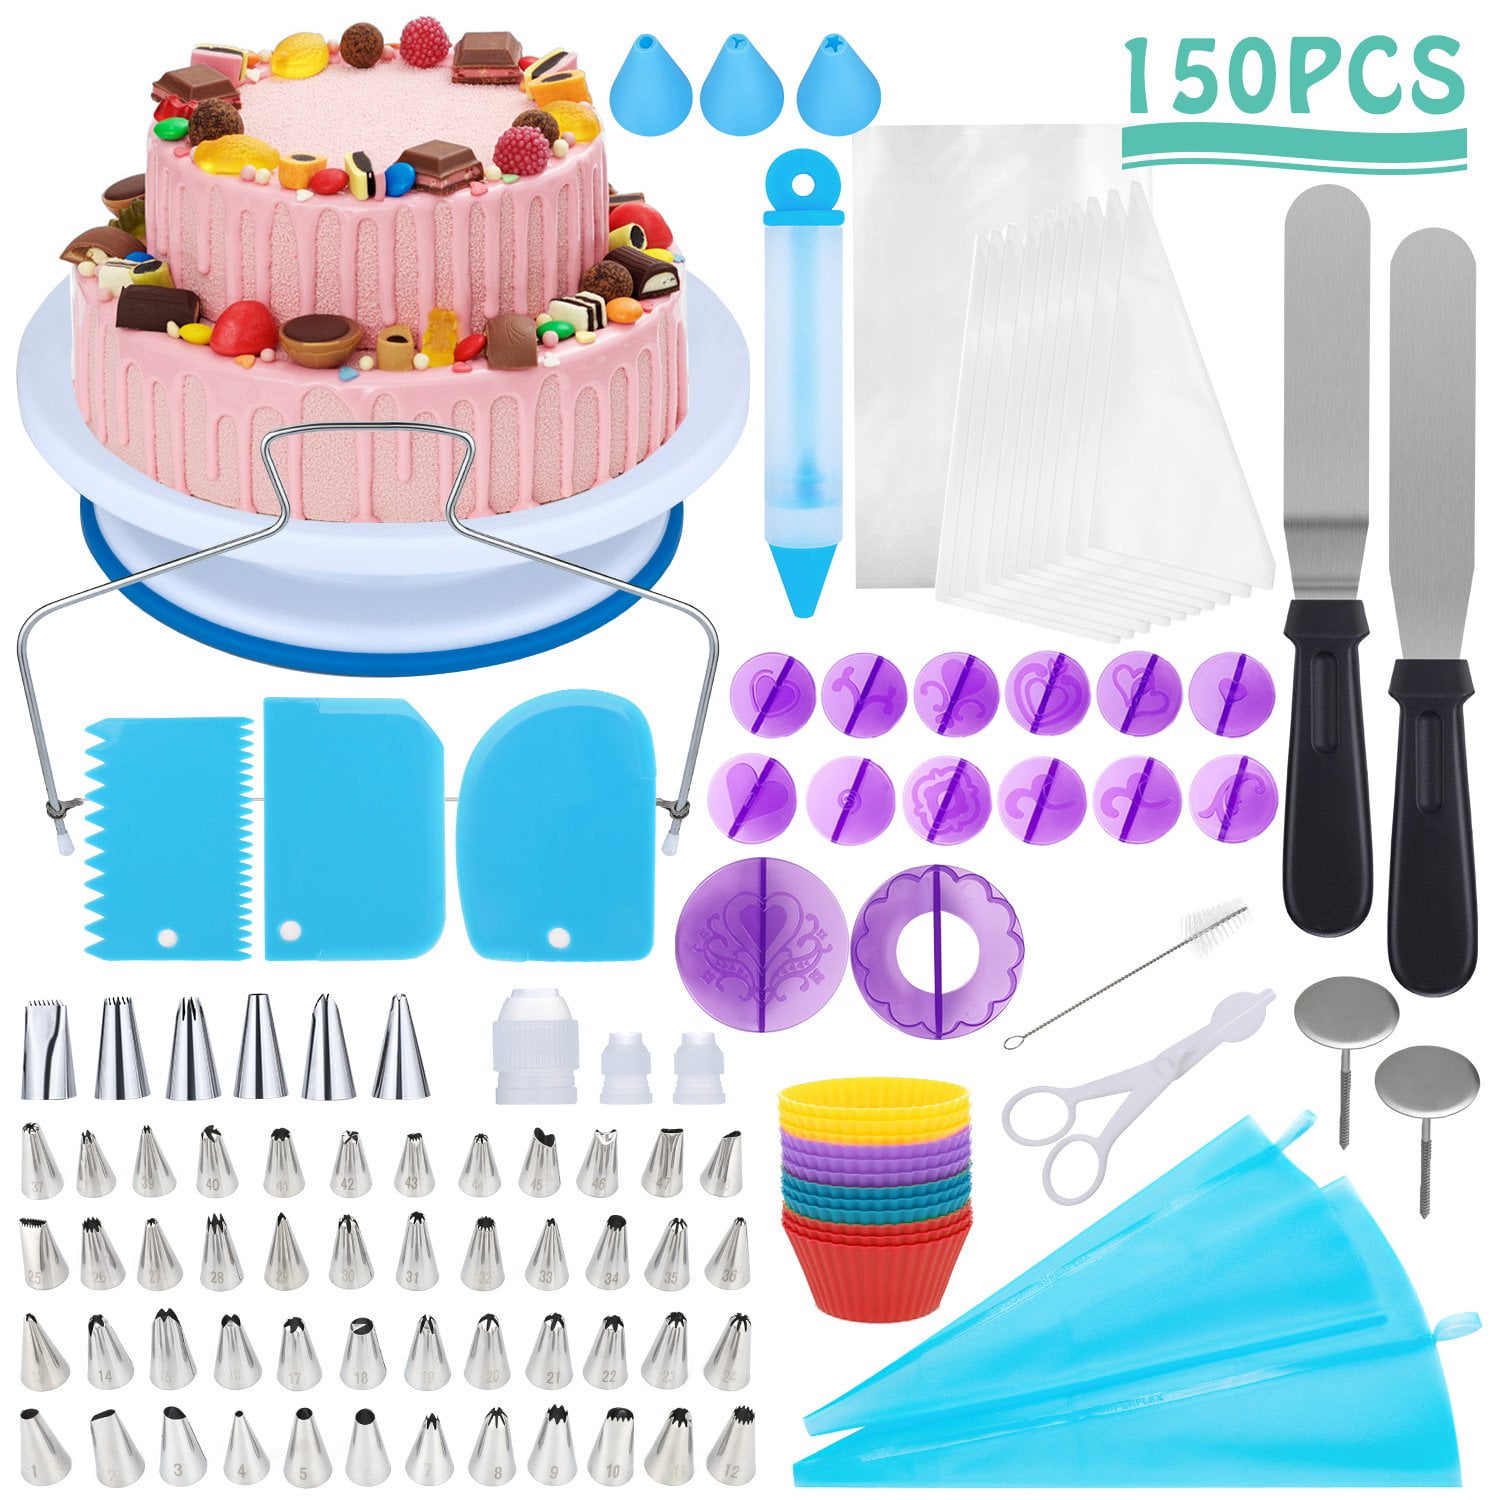 72 Pieces per Set Cake Decorating Kit Supplies Set Tools Piping